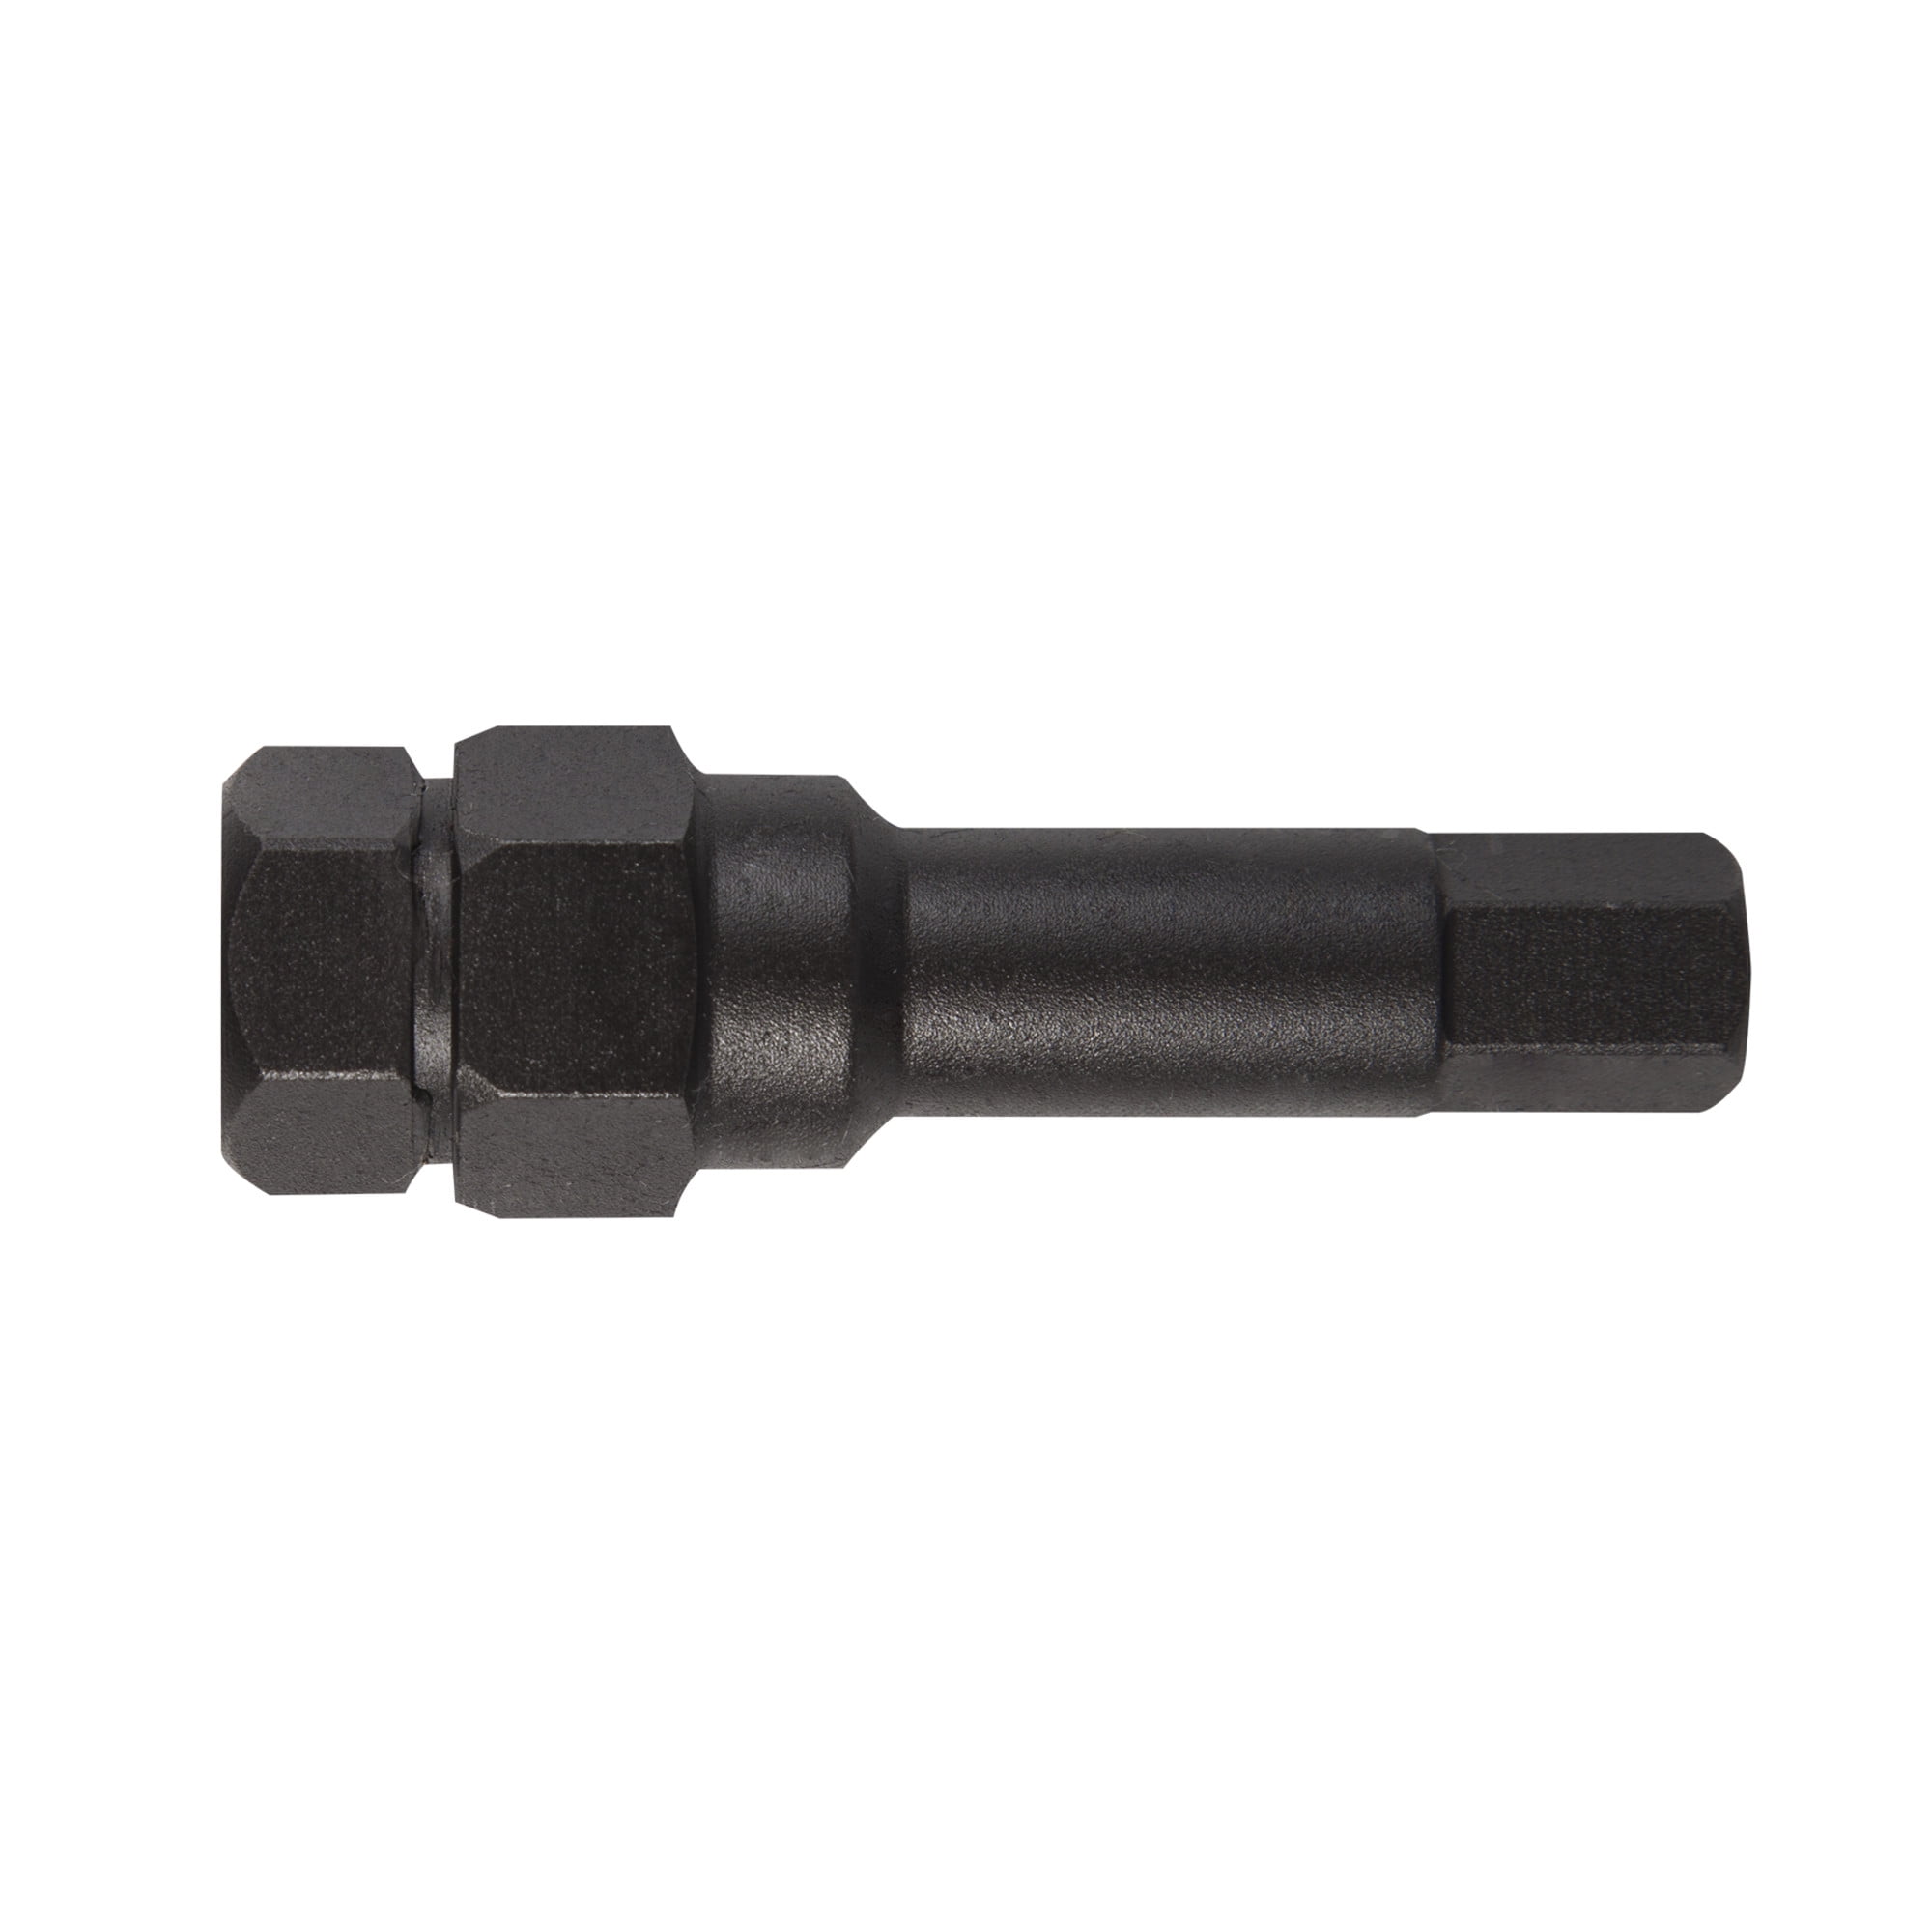 12mm 78542 Steelman Pro High Tech Non-Fluted Hex Wheel Lug Key Socket 